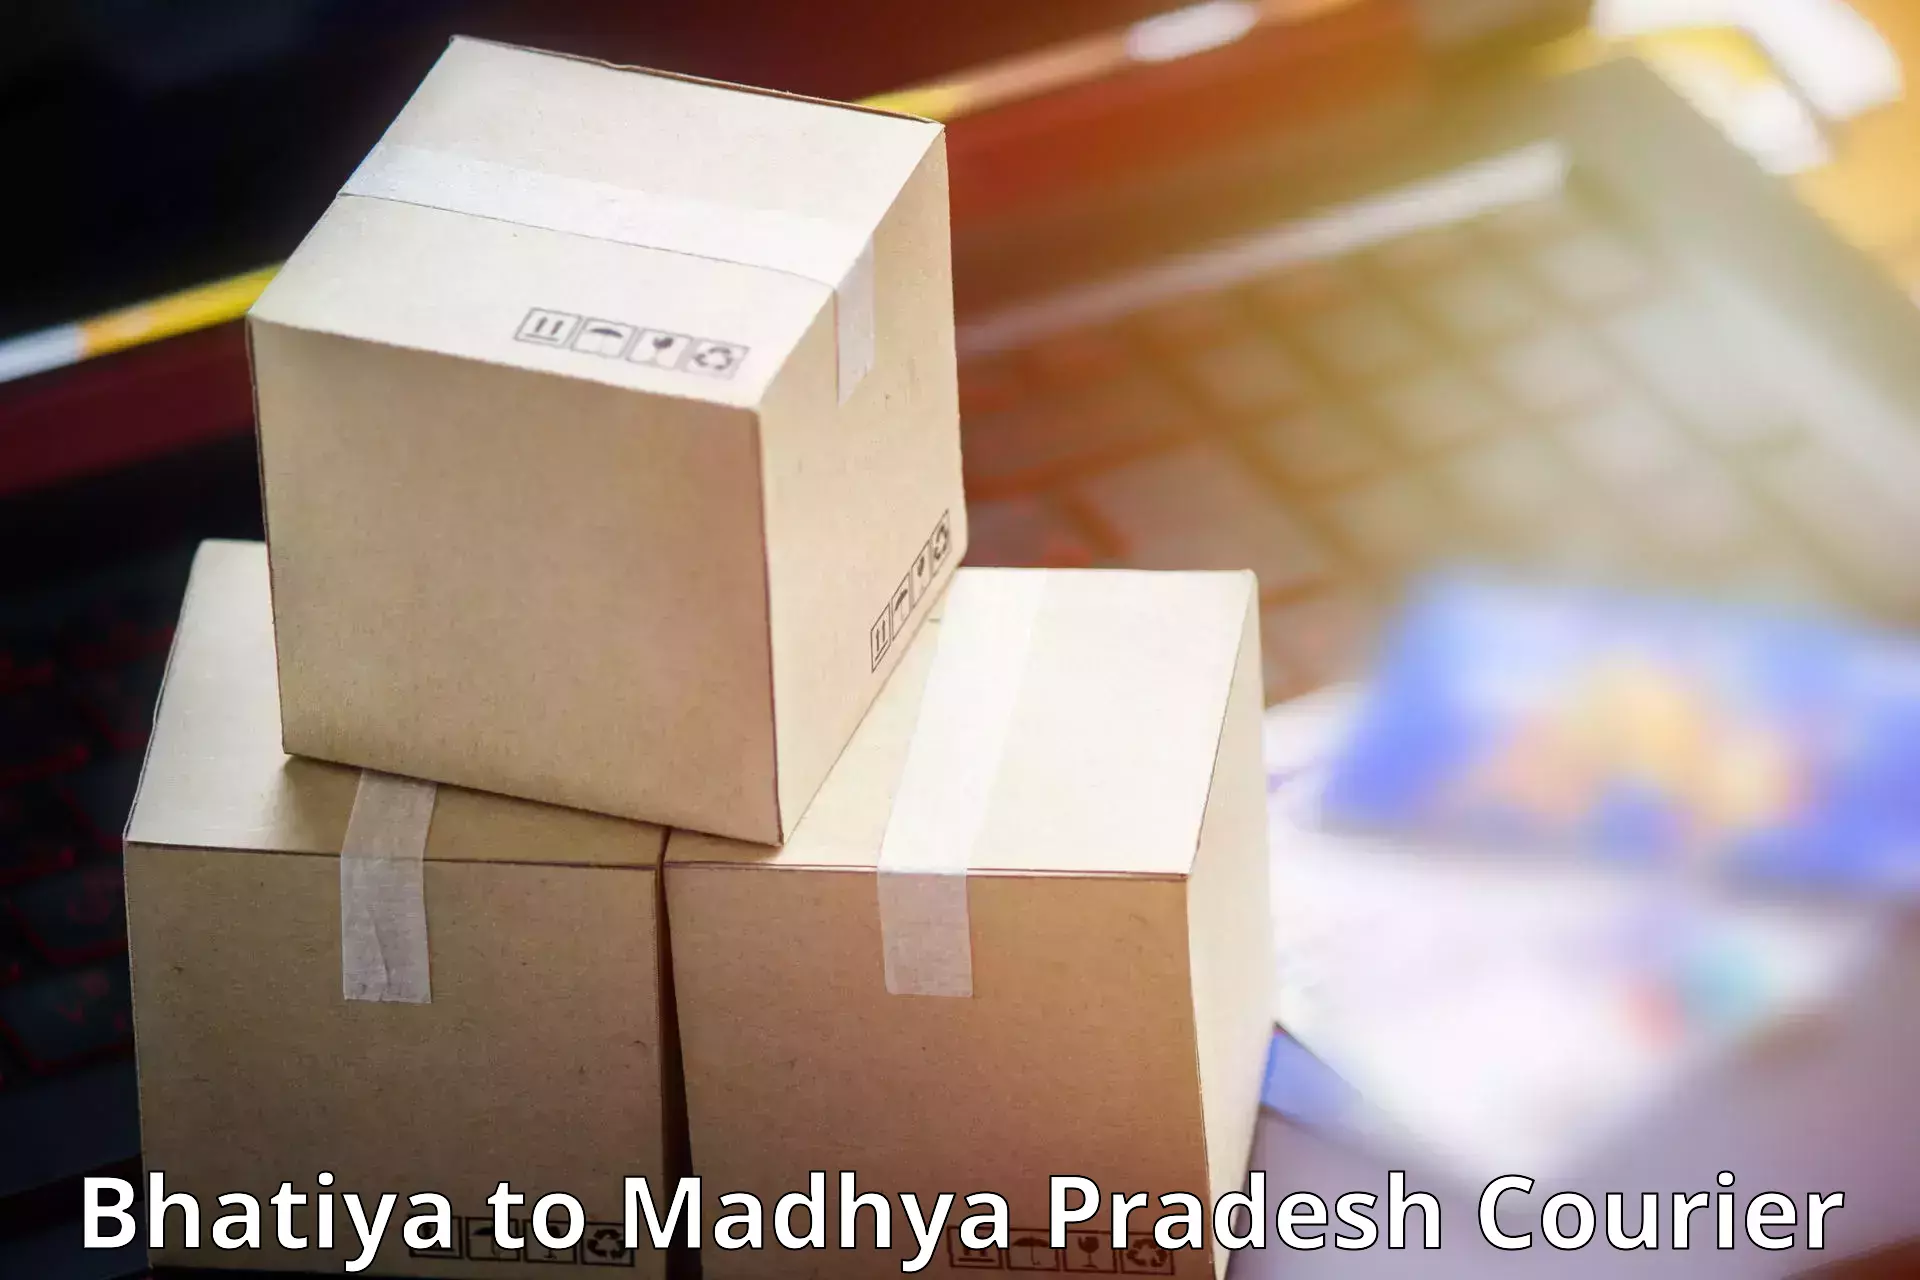 Courier service comparison Bhatiya to Manasa